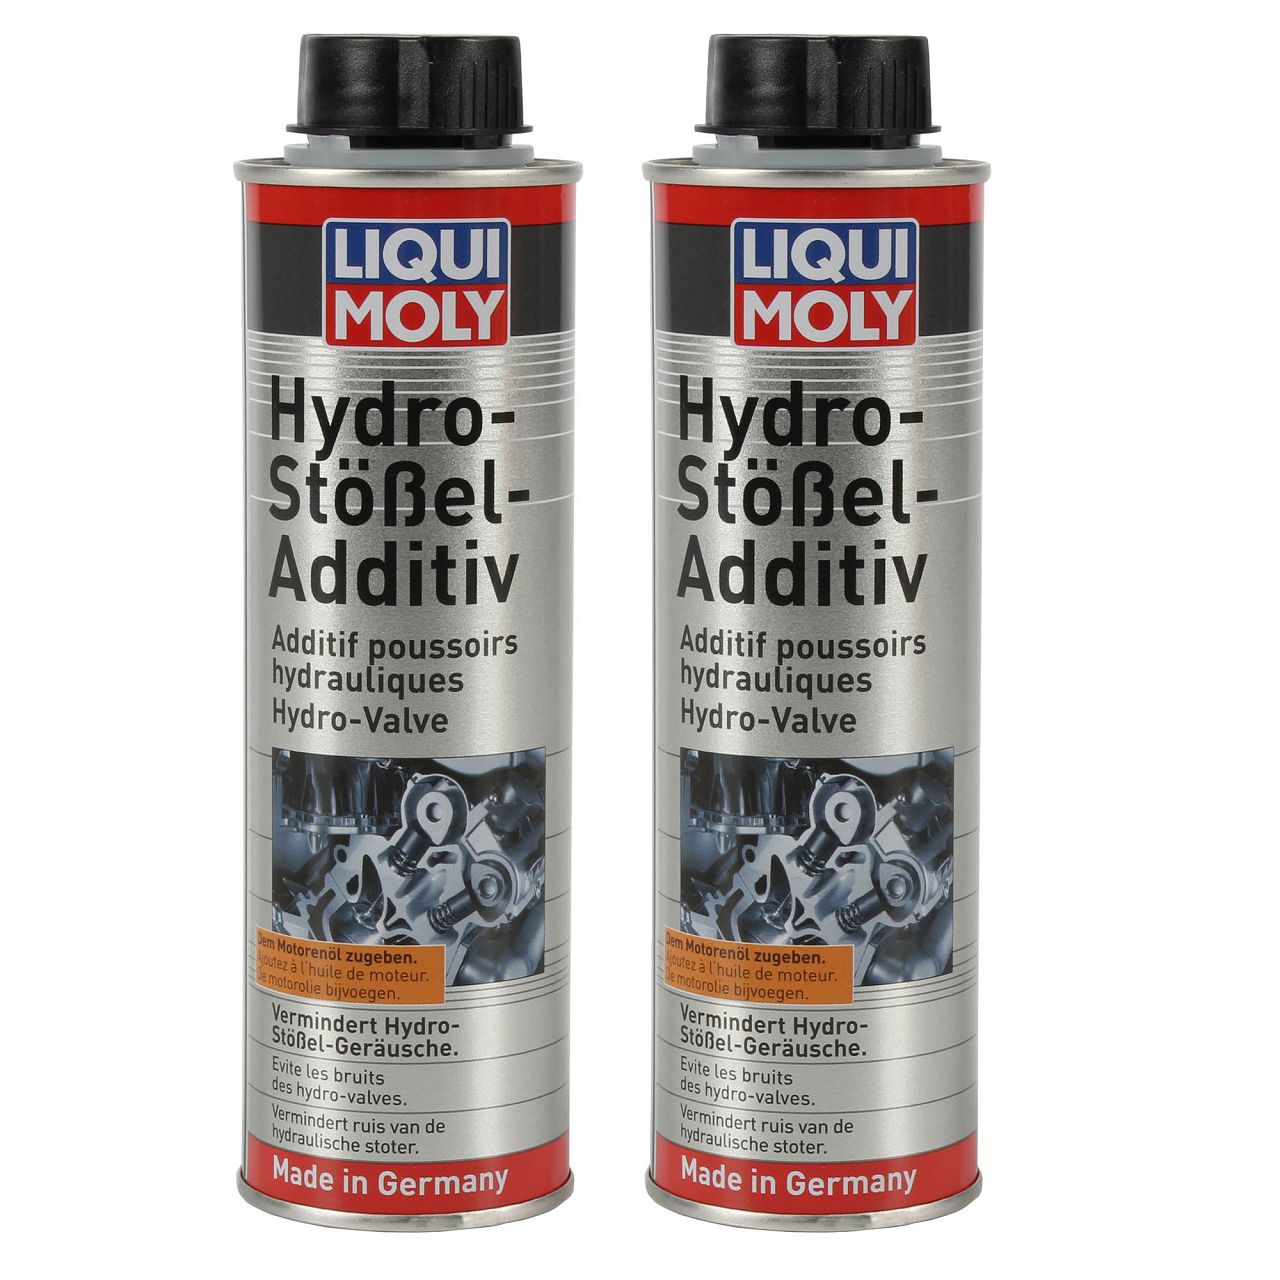 2x 300ml LIQUI MOLY 1009 Hydro-Stößel-Additiv Hydrostößel Reiniger Öl Additiv